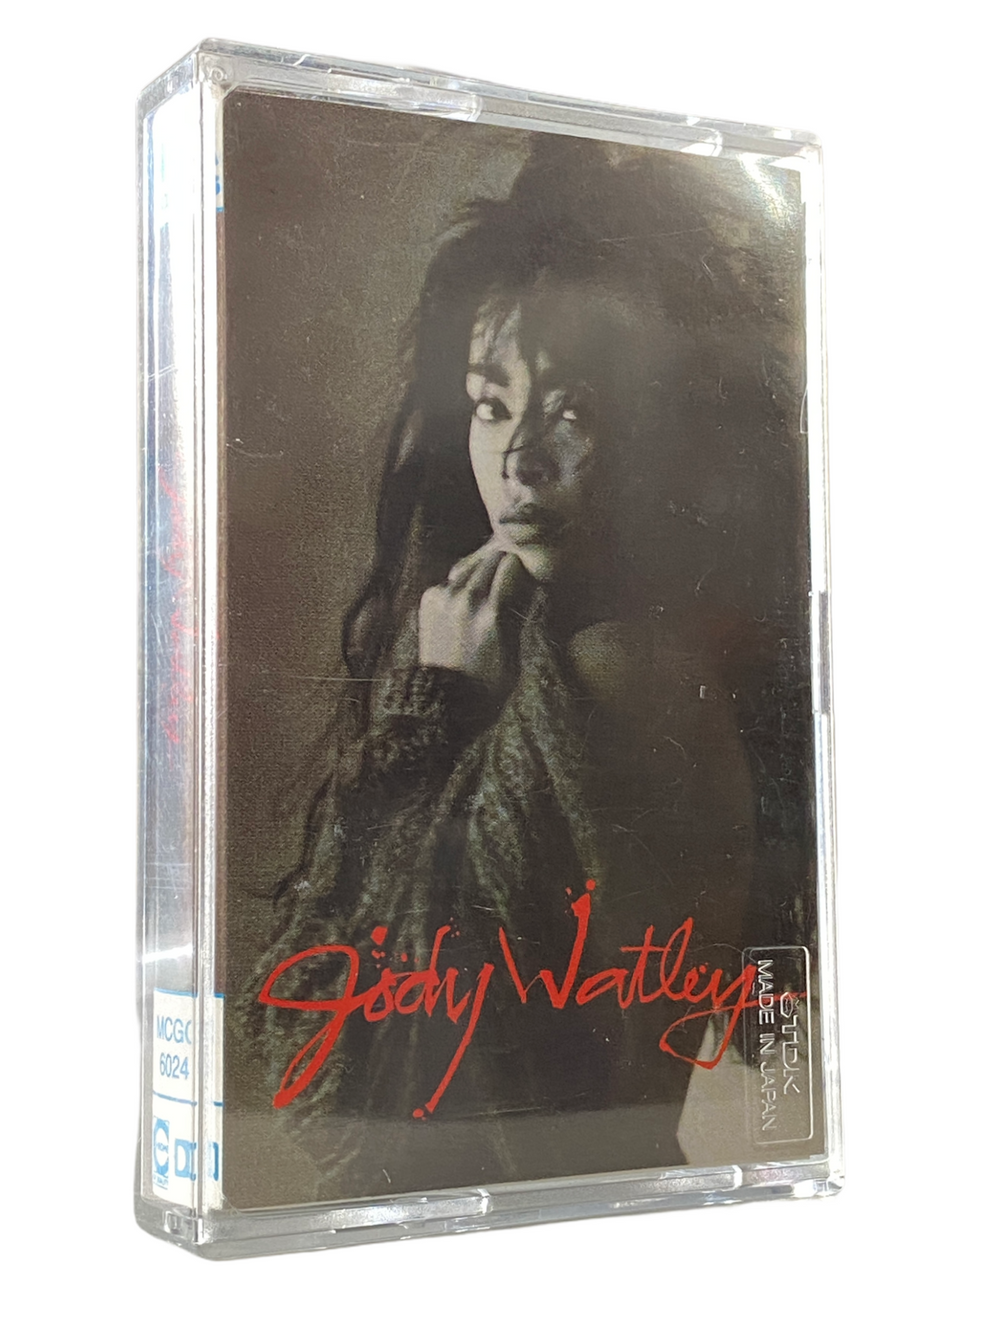 Prince – Jody Watley Self Titled Original Cassette Tape UK 1987 Release Prince